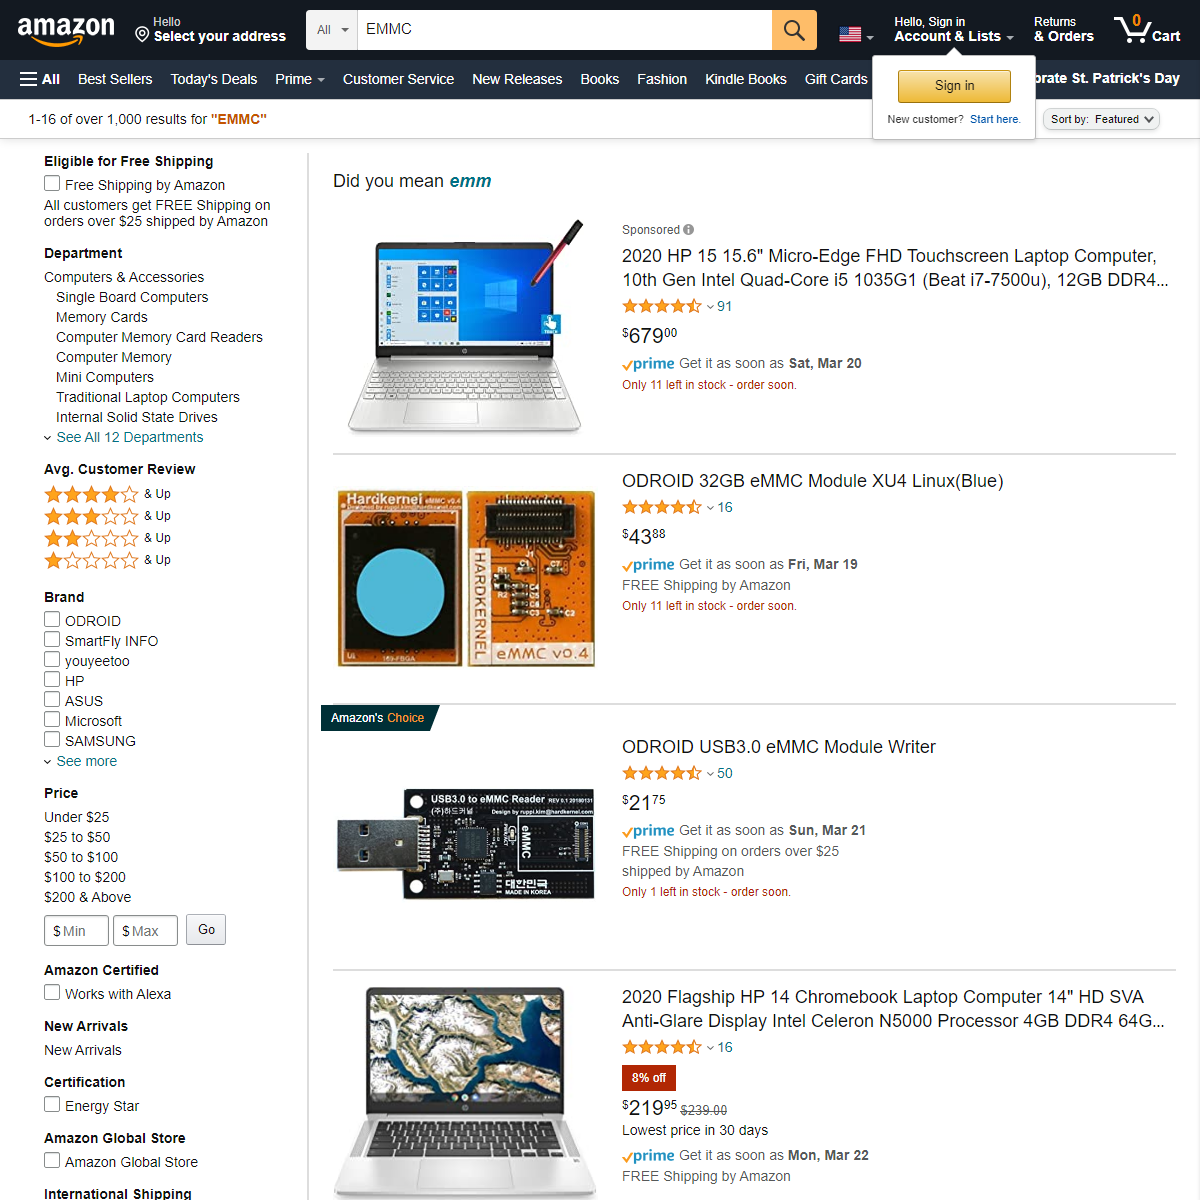 Amazon.com - EMMC